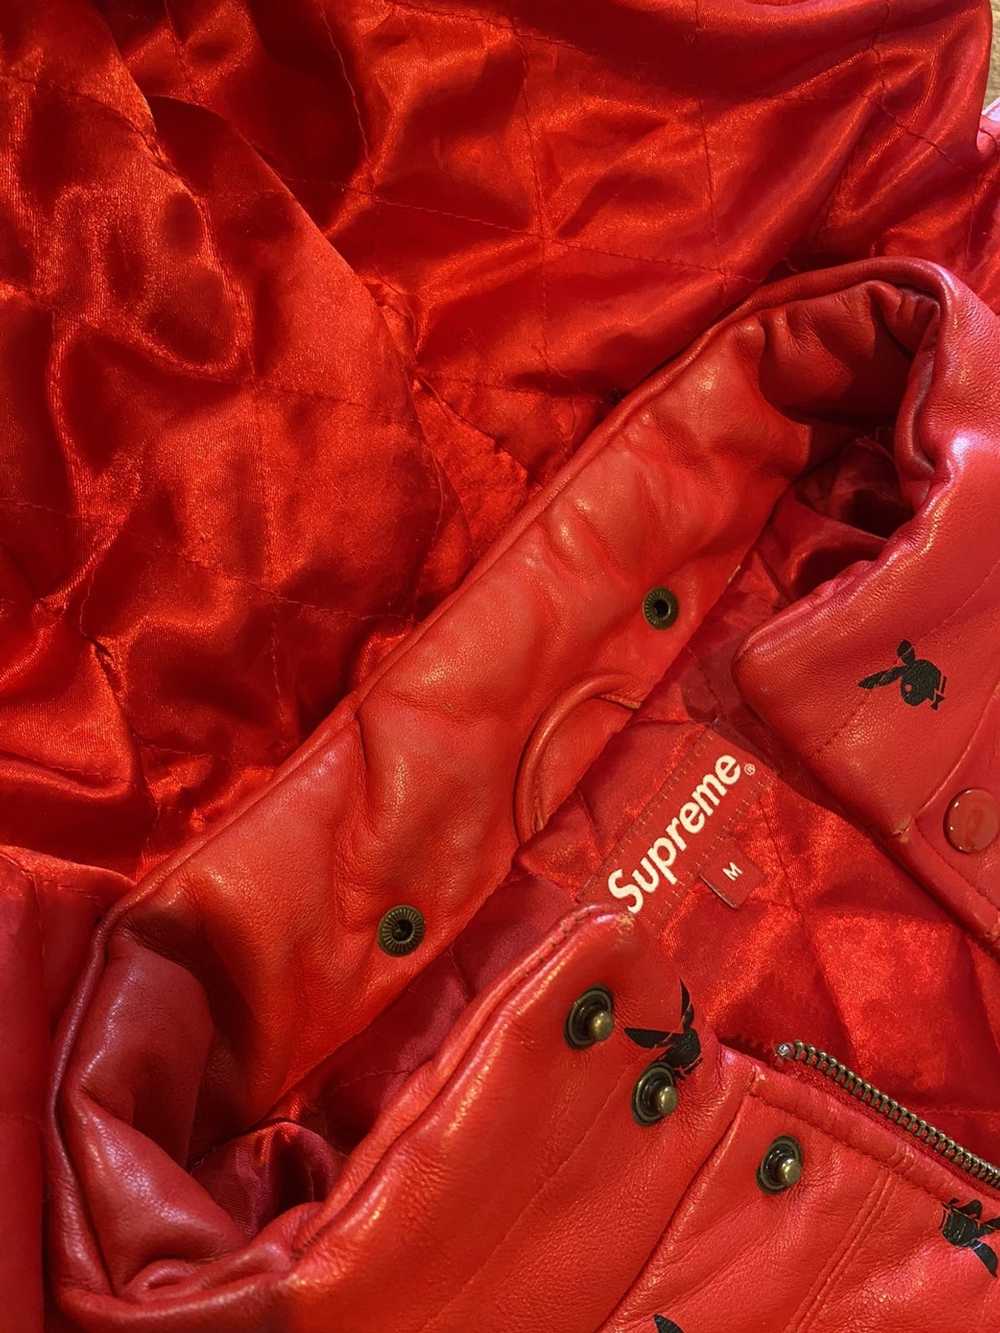 Supreme Supreme x playboy leather puffer jacket - image 11